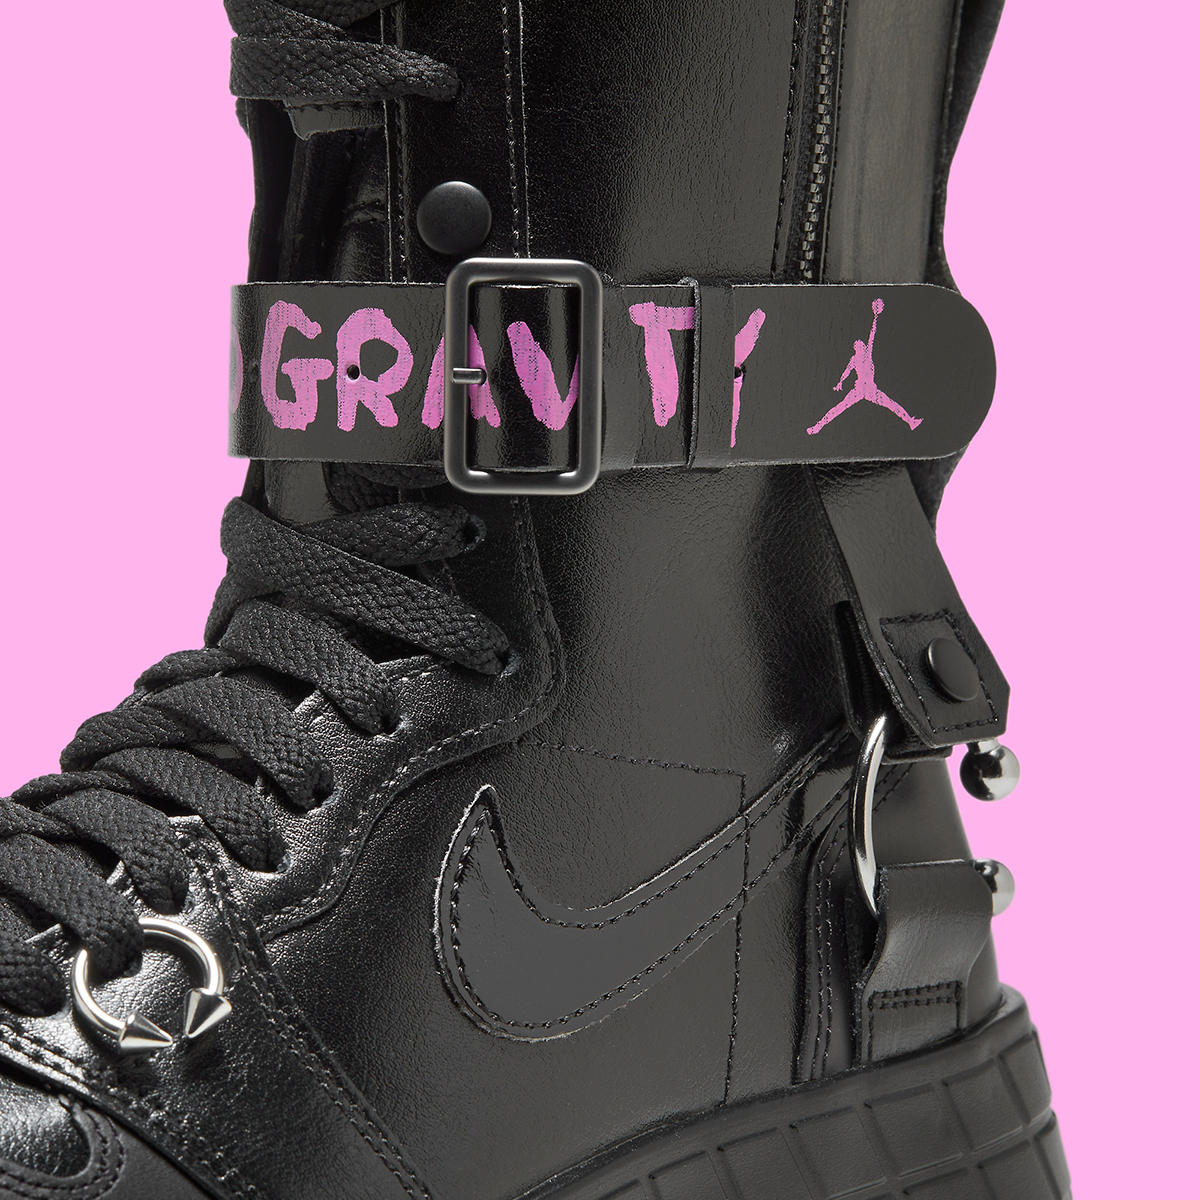 Air Jordan 3 Retro Cyber Monday Blackout ballhard_d Brooklyn Gravity Goth Punk Hf5691 001 8